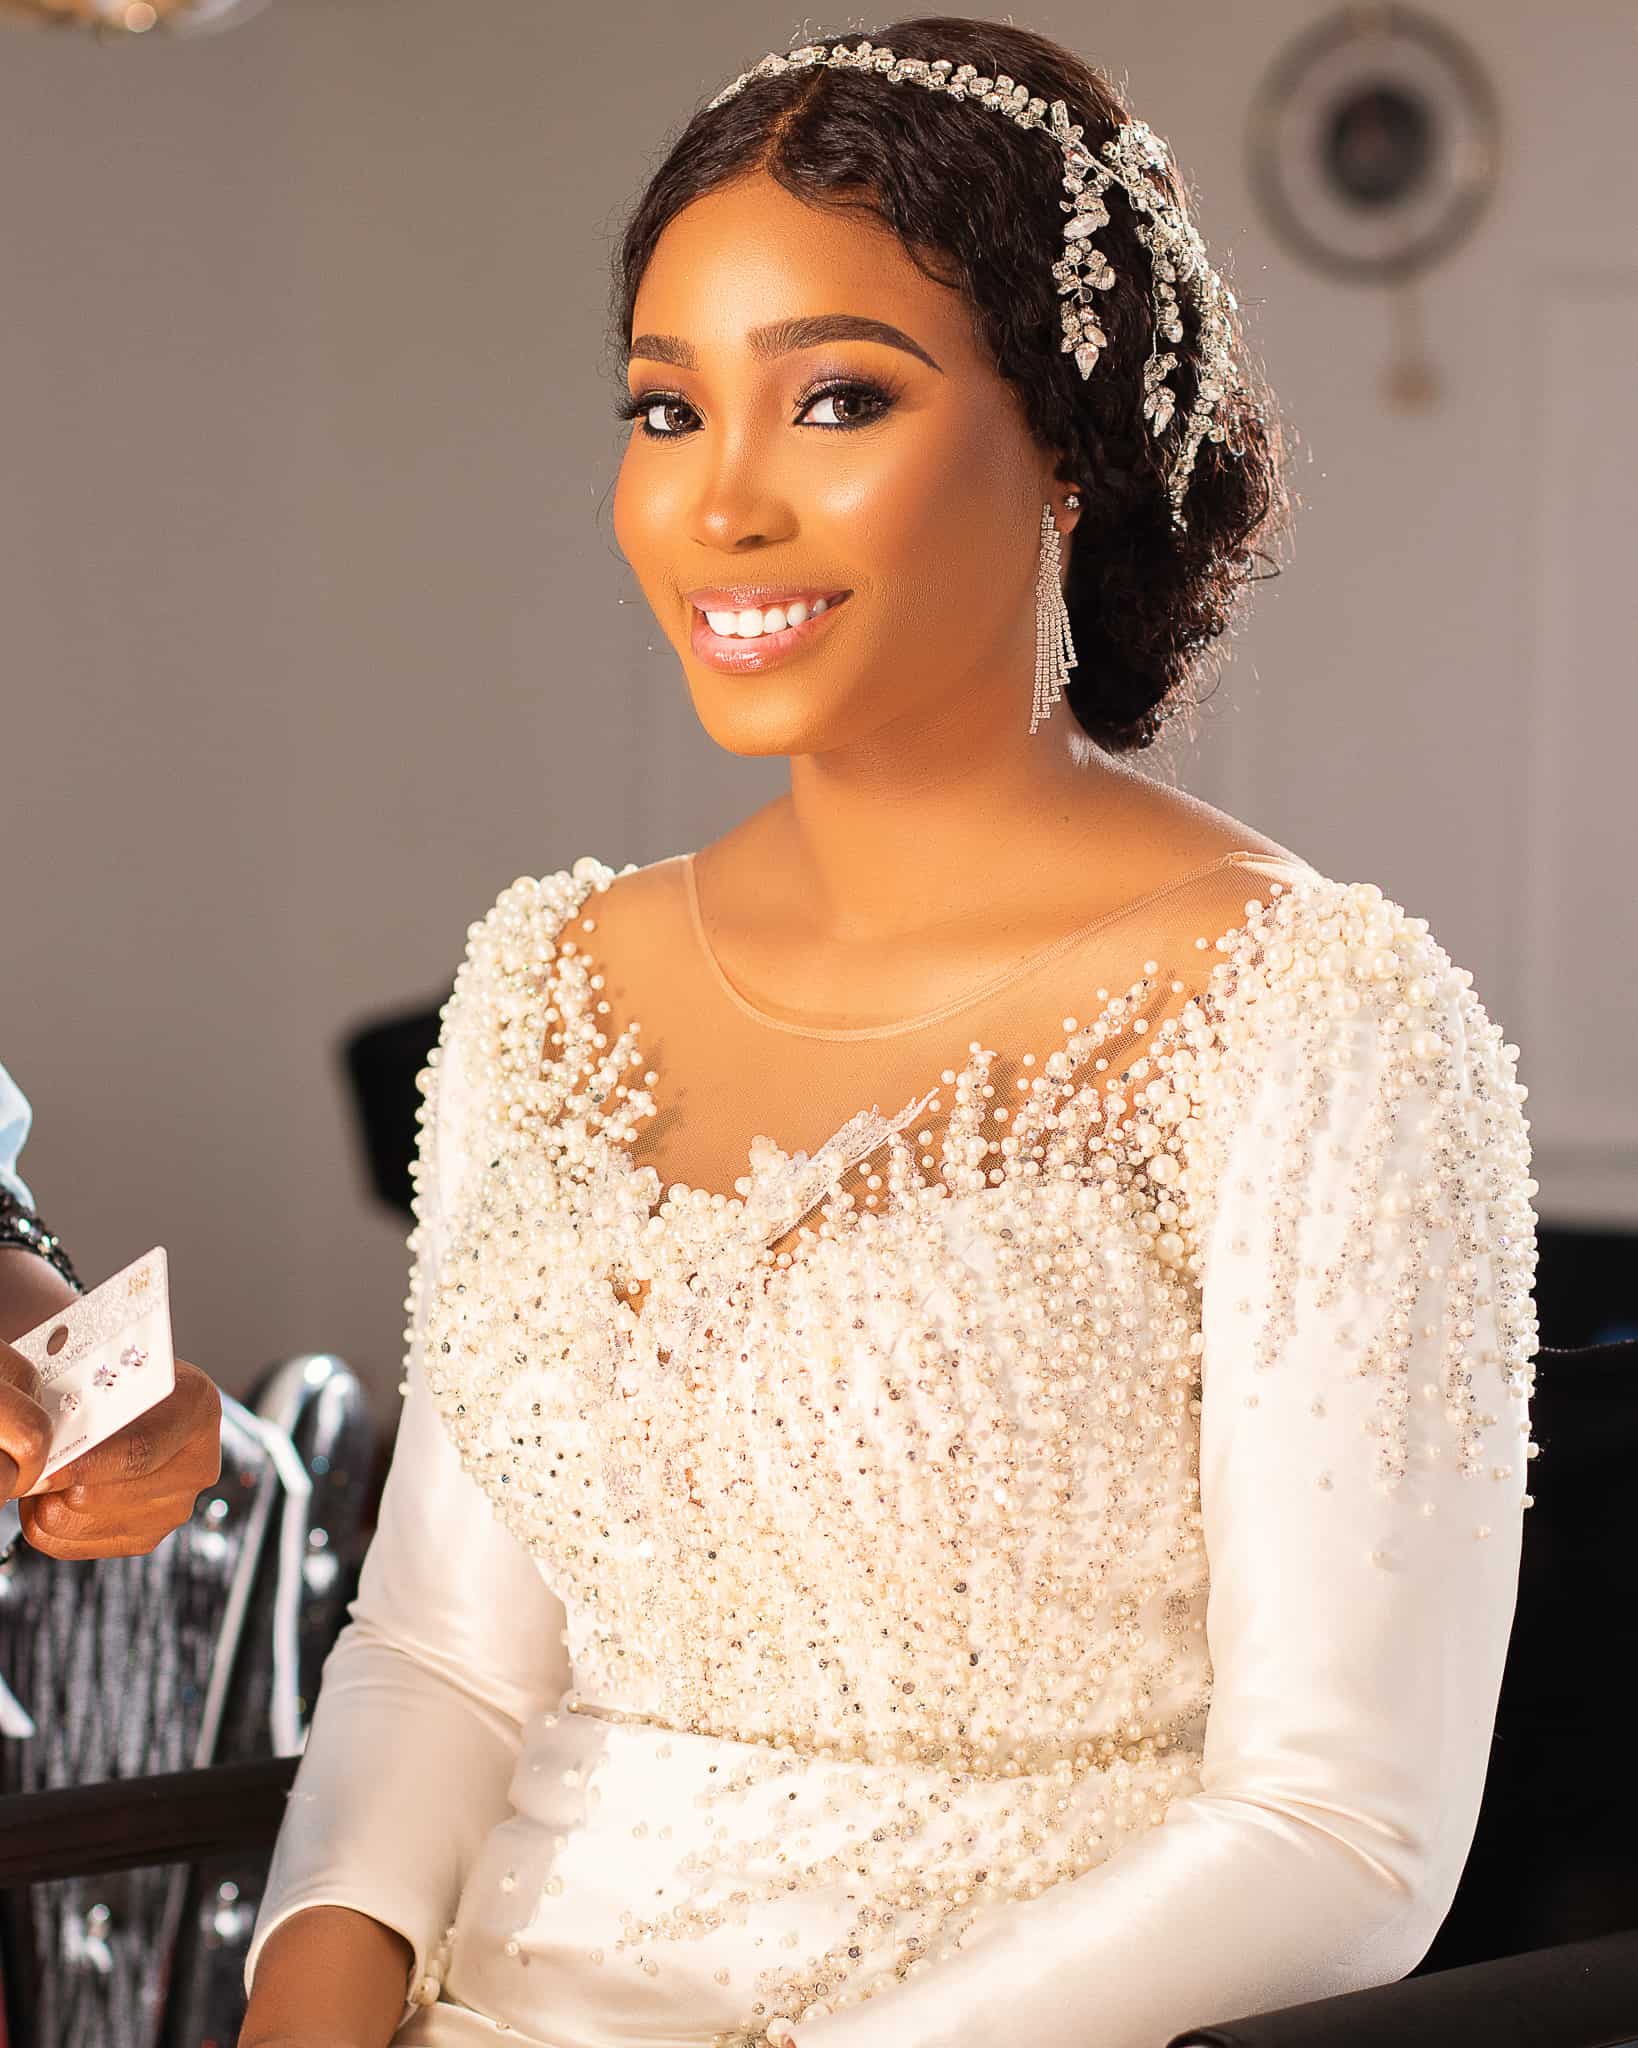 Rent buy custom order luxury bridal accessories wedding gowns bridal dresses Lagos Nigeria